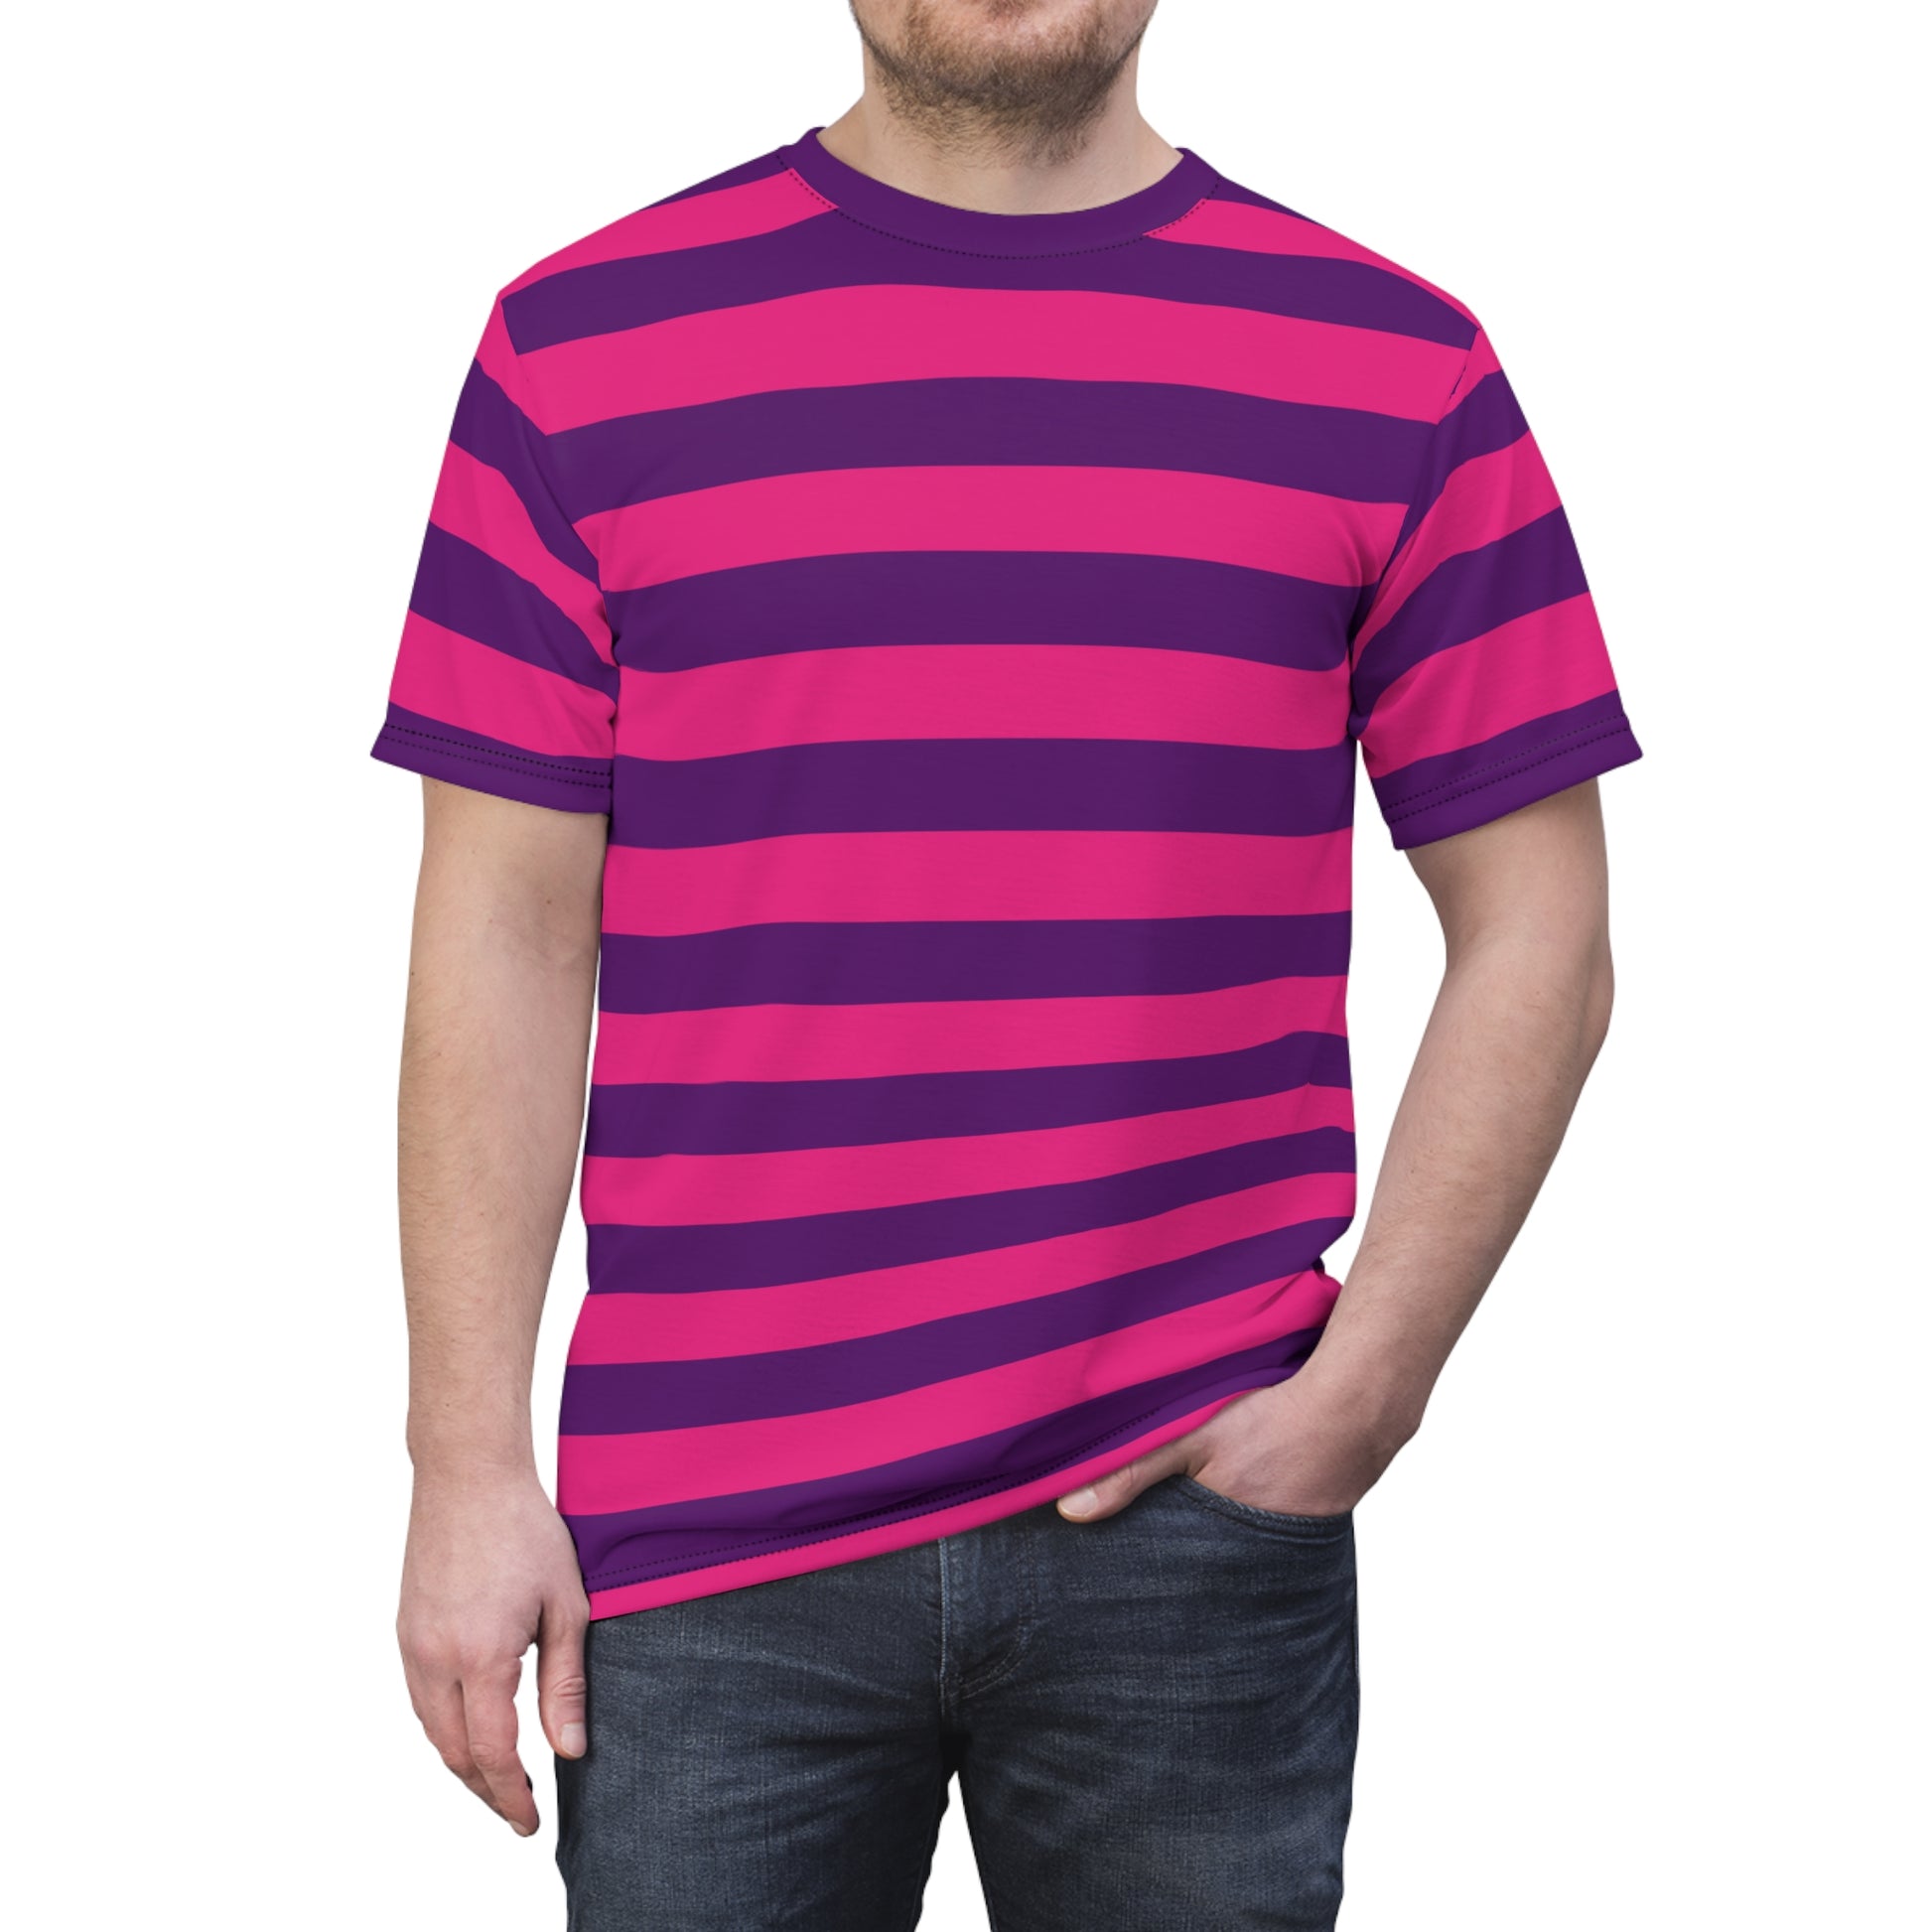 Pink and Purple Striped Tshirt, Designer Graphic Aesthetic Lightweight Heavyweight Crewneck Men Women Tee Top Short Sleeve Shirt Starcove Fashion